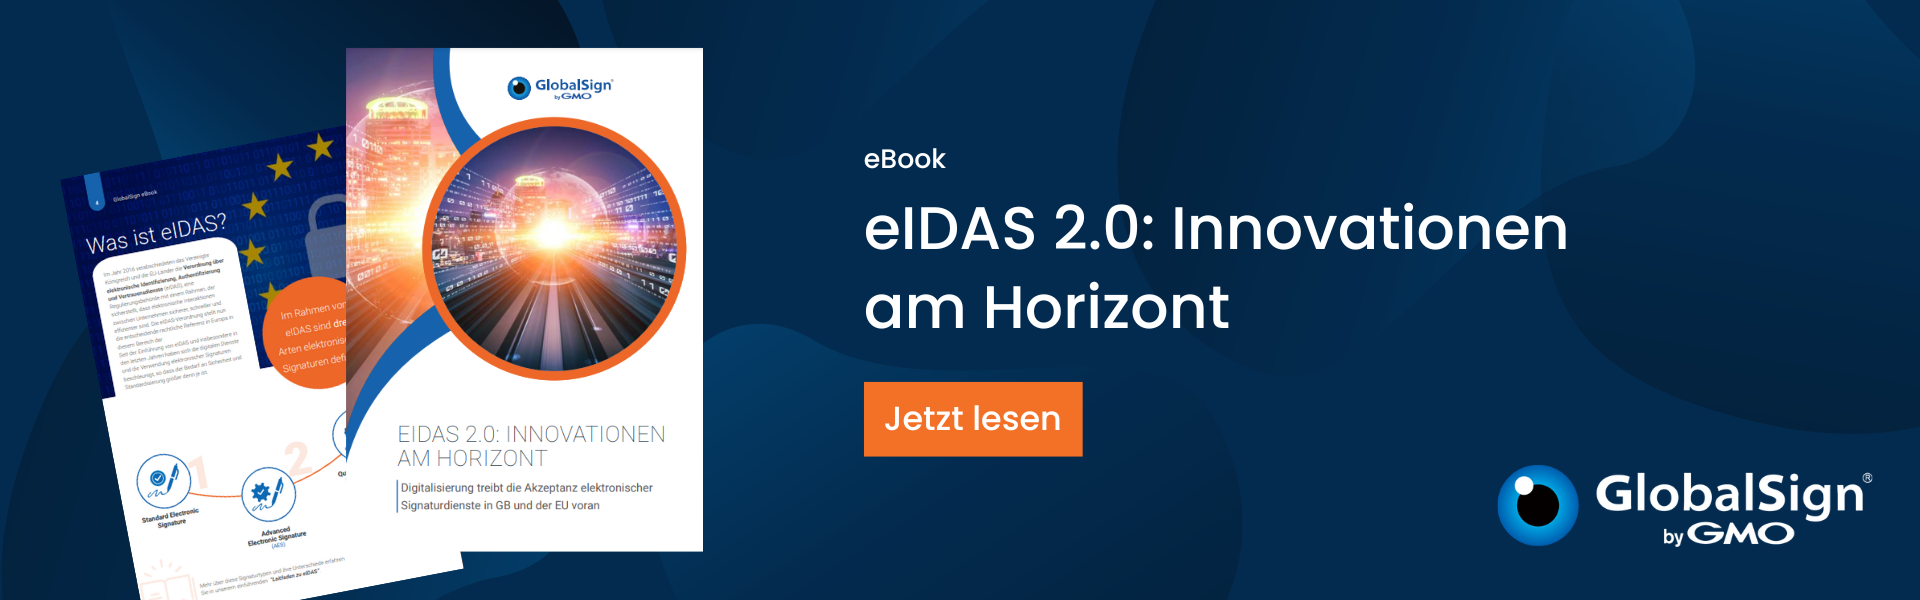 eIDAS 2.0: Innovationen am Horizont